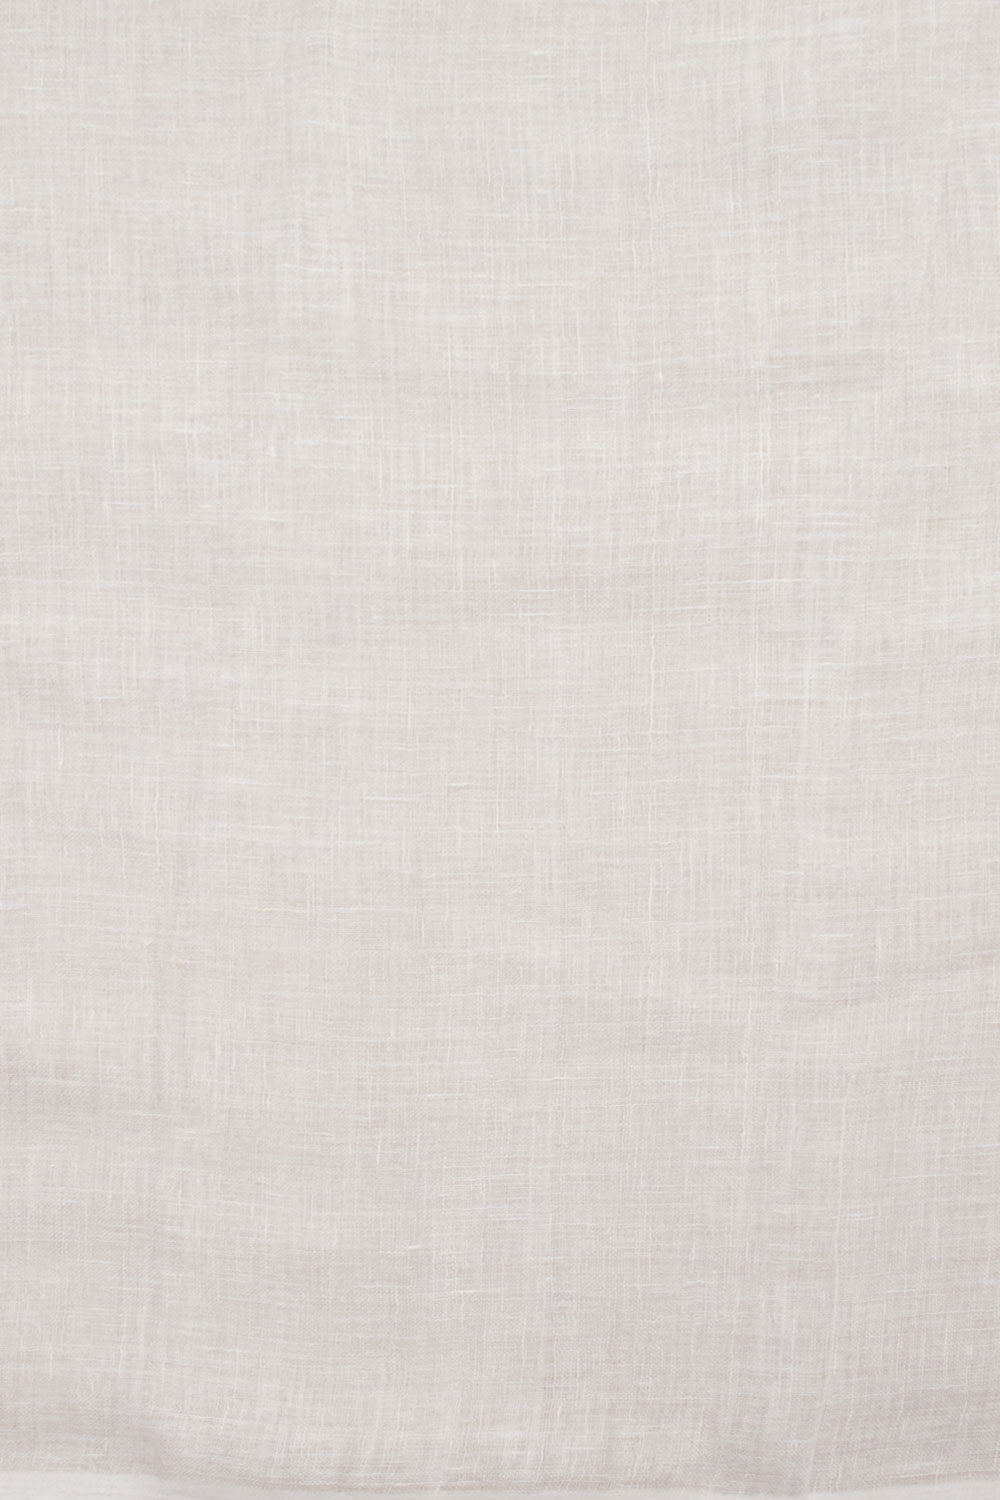 White Handloom Jamdani Linen Saree 10061414